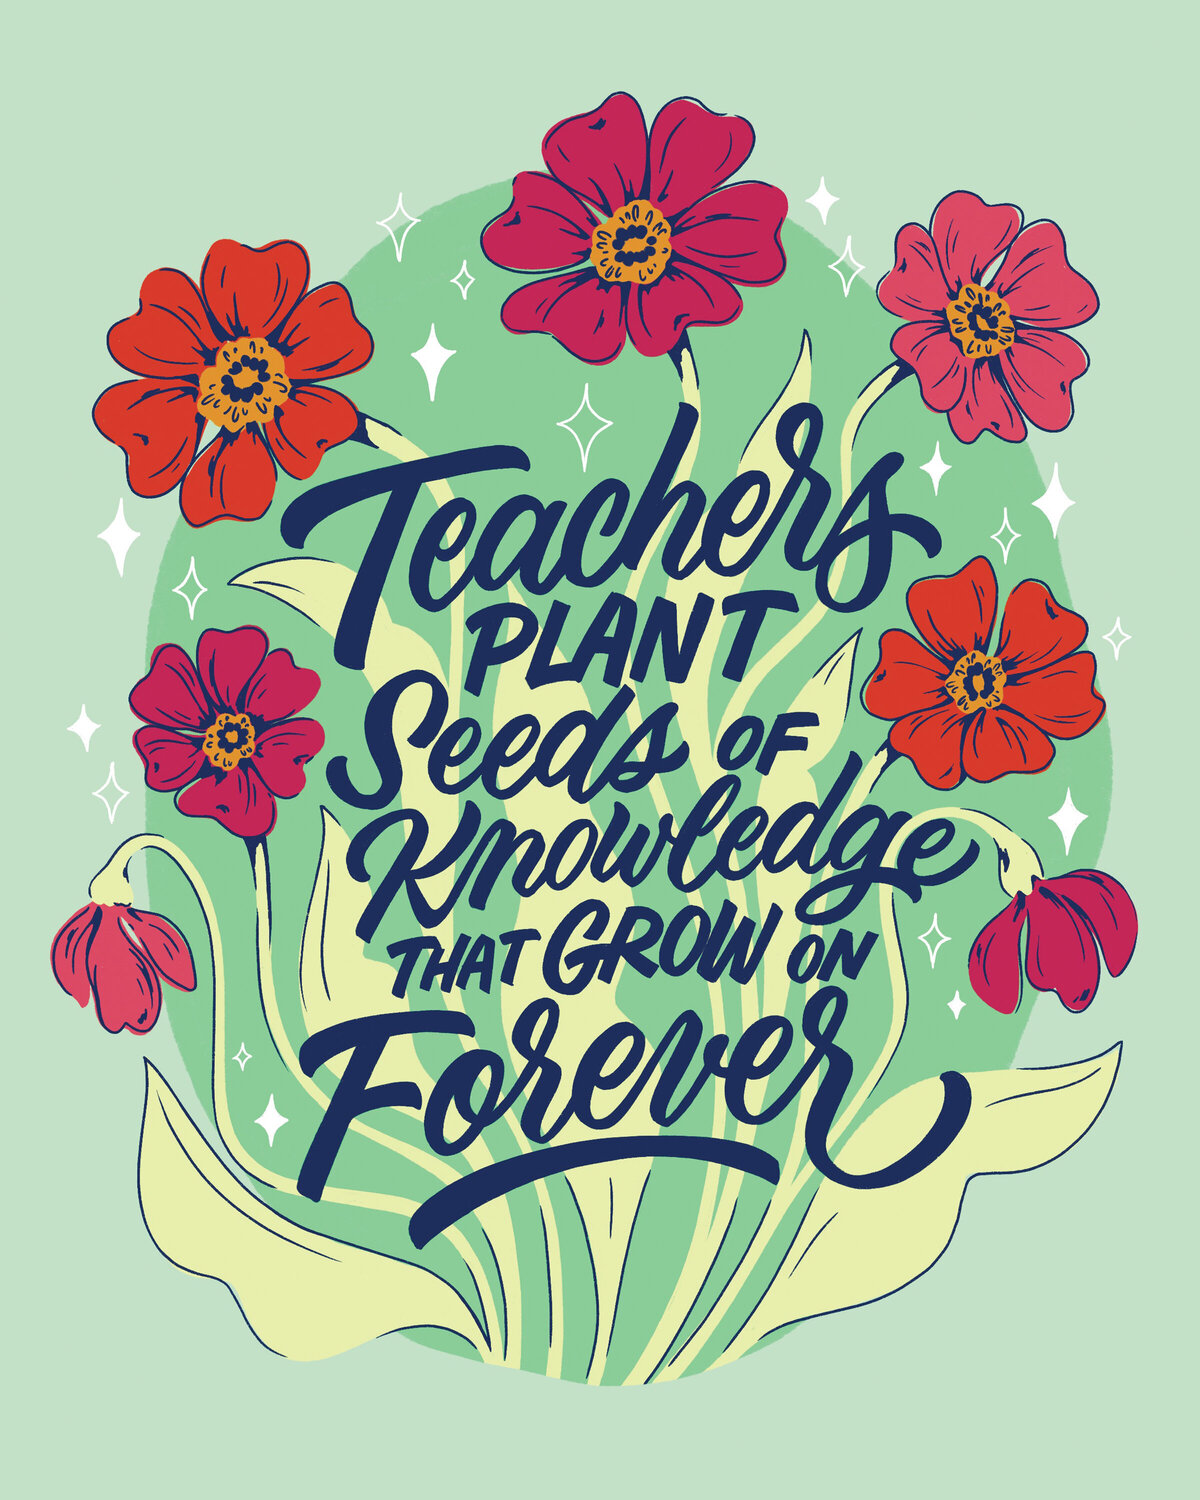 Teachers Seeds